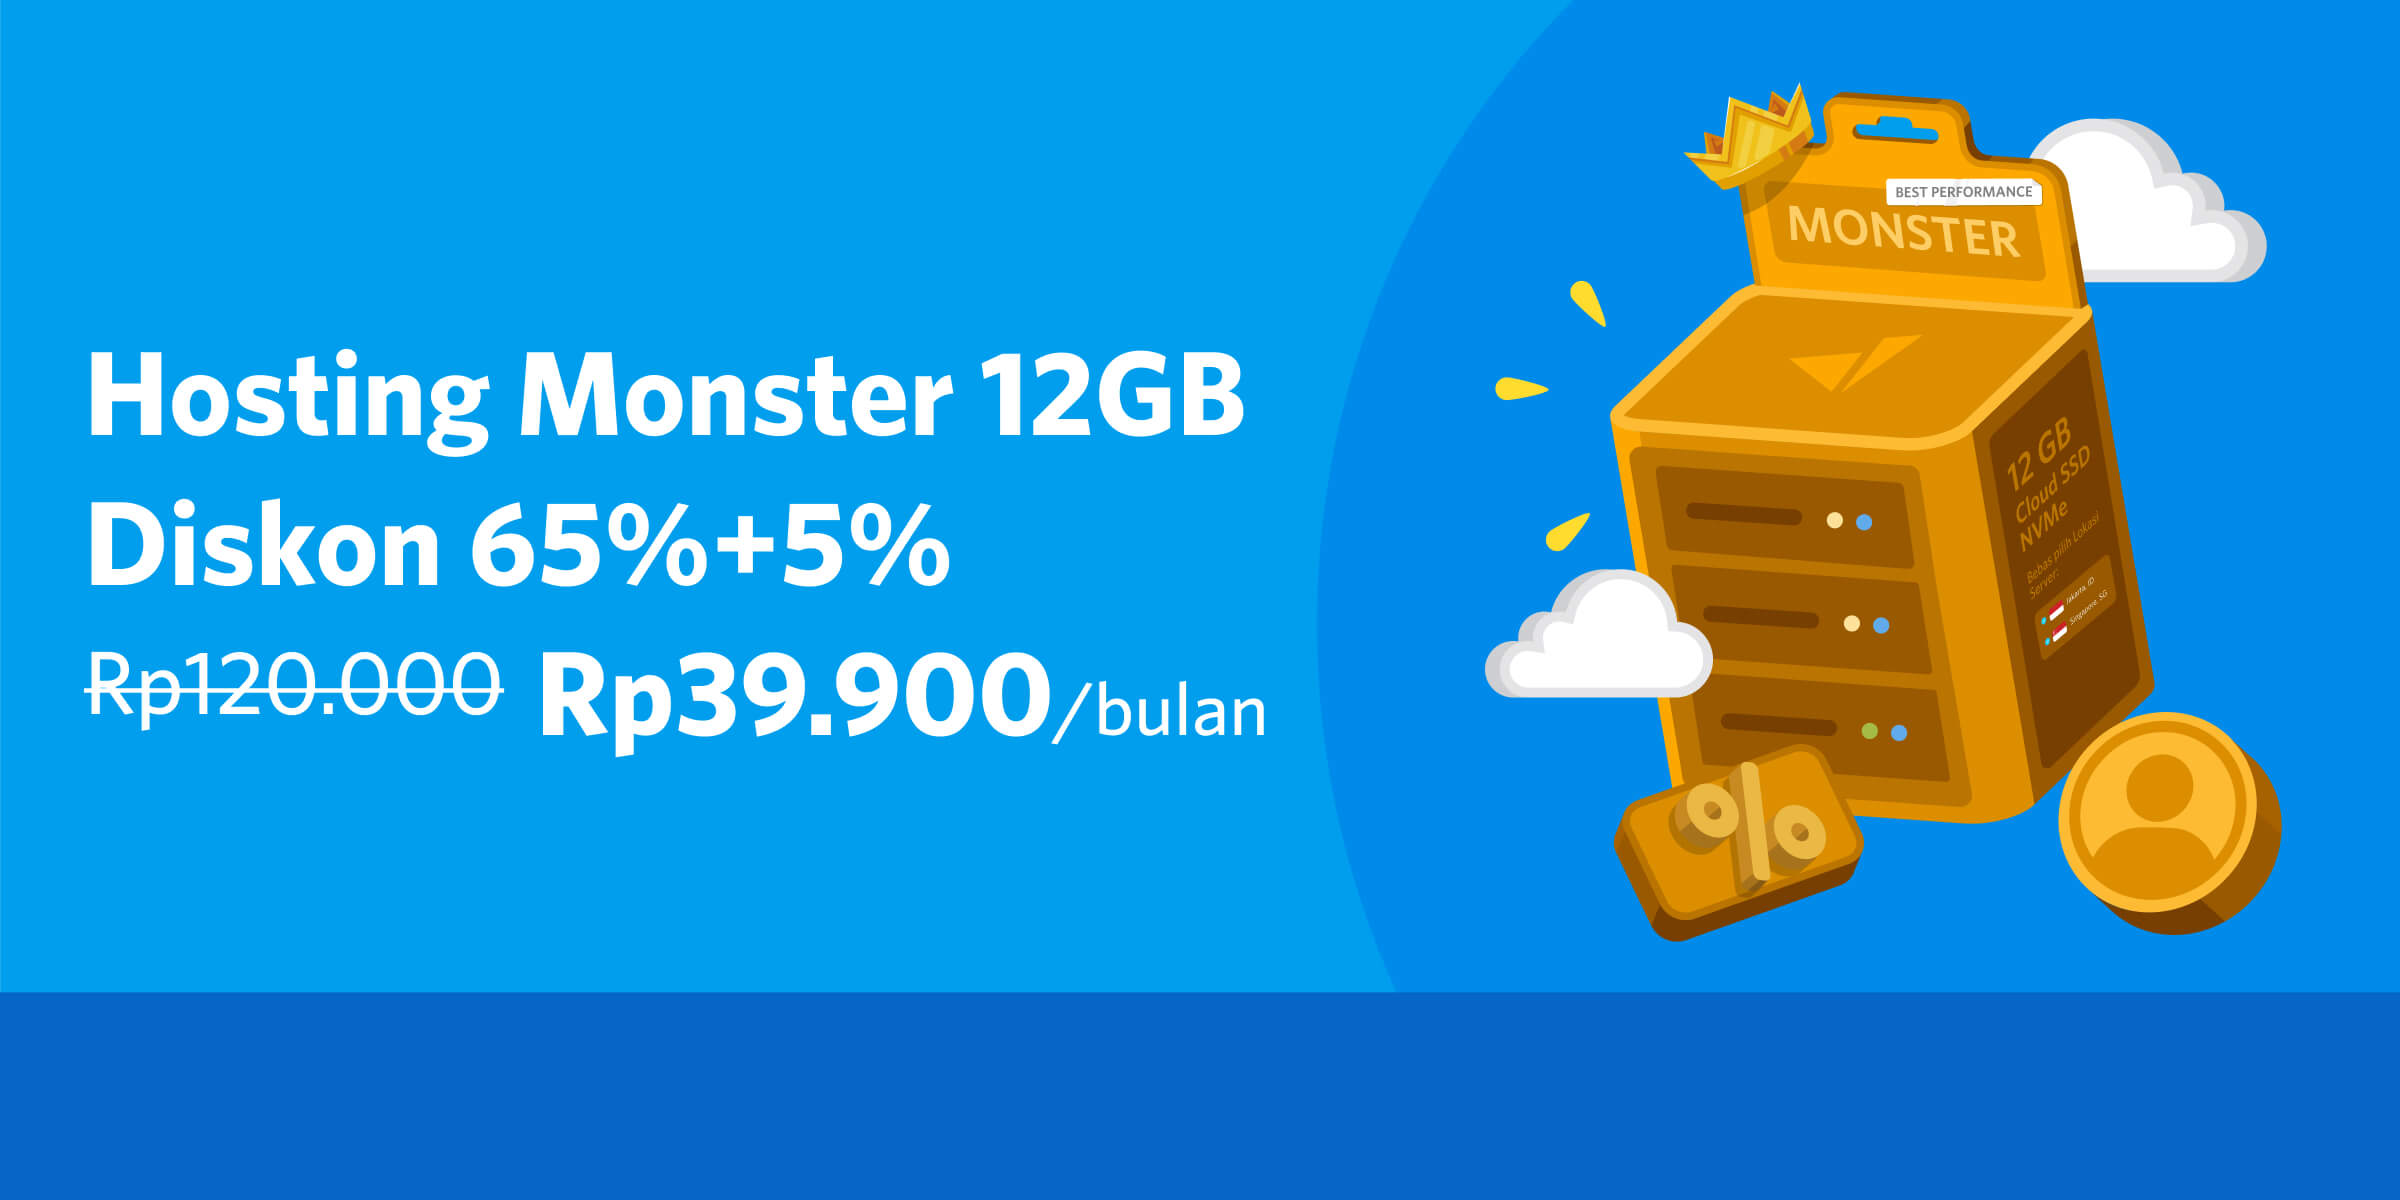 Diskon 65%+5% Web Hosting Monster 12GB